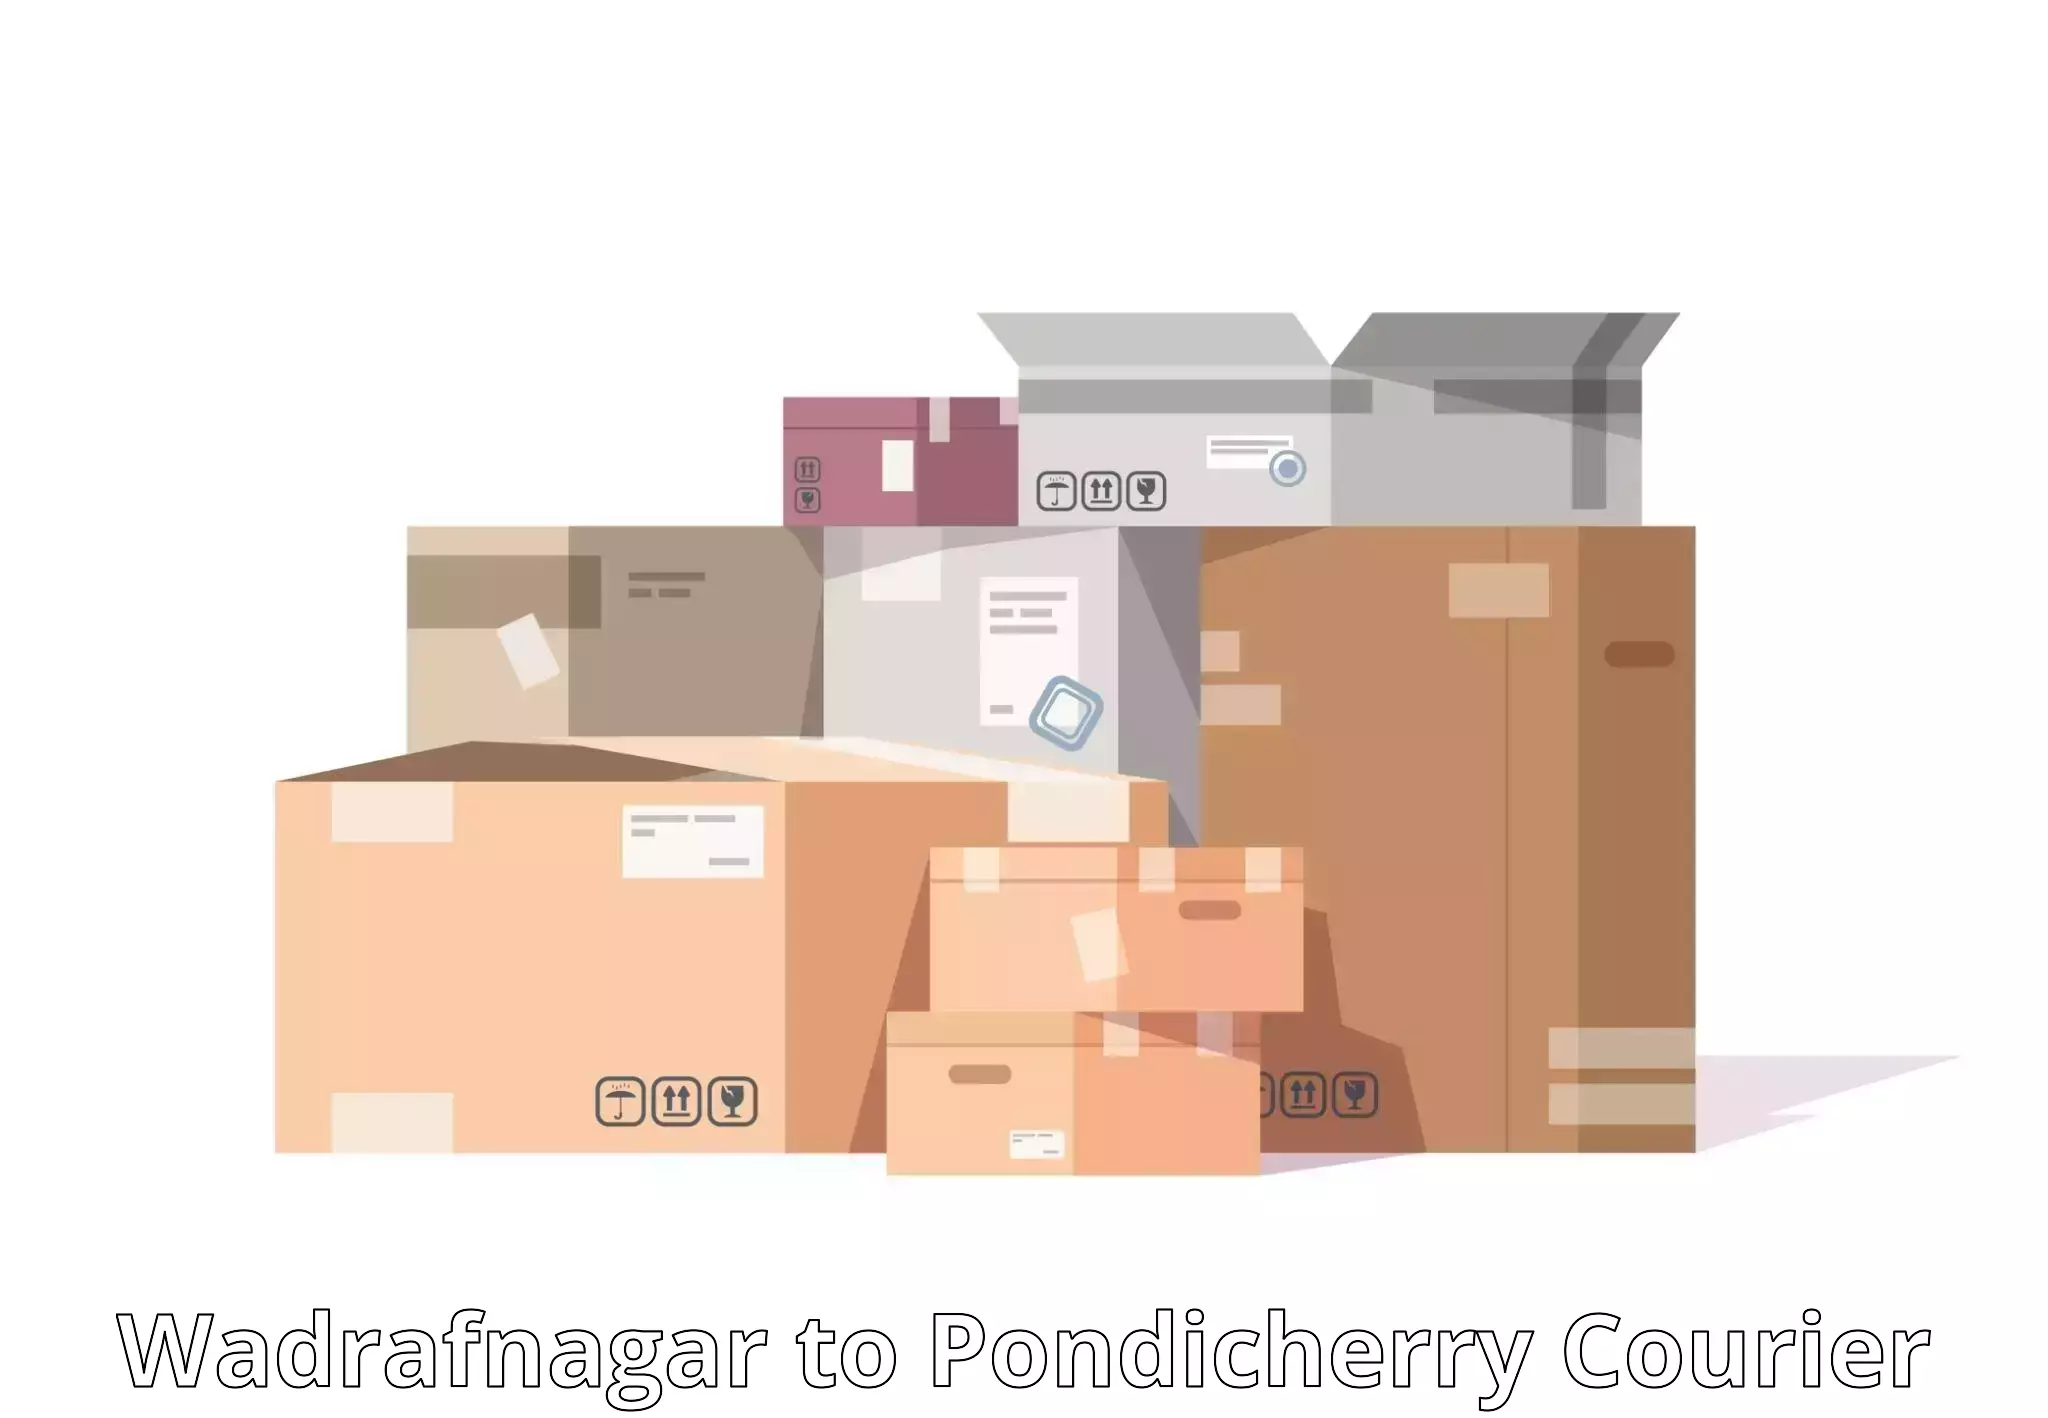 Door-to-door shipment Wadrafnagar to Metttupalayam